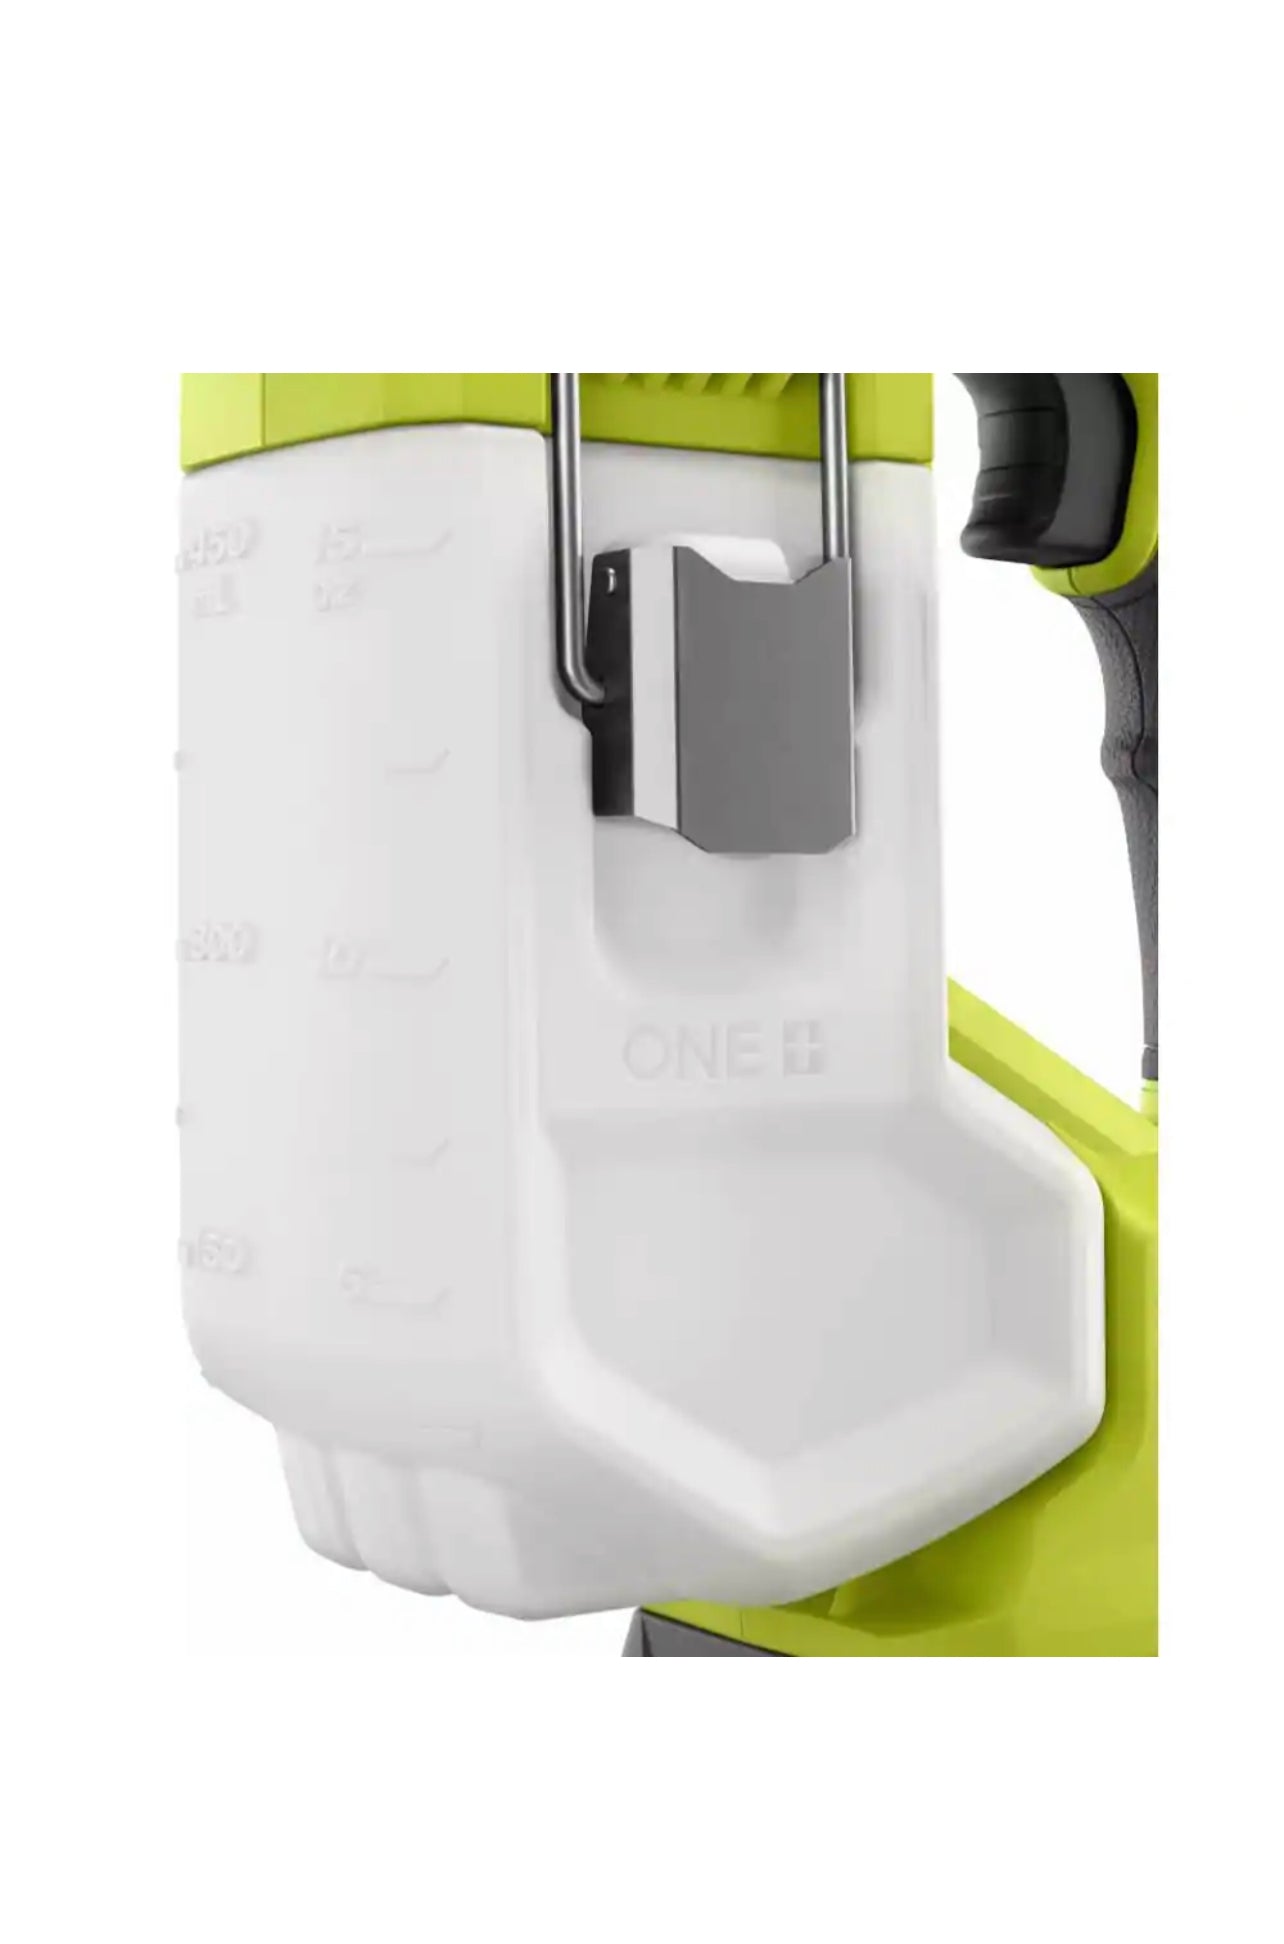 Ryobi One Plus 18V Cordless Handheld Sprayer (Tool Only) Damaged Box – Tool  Mart Inc.